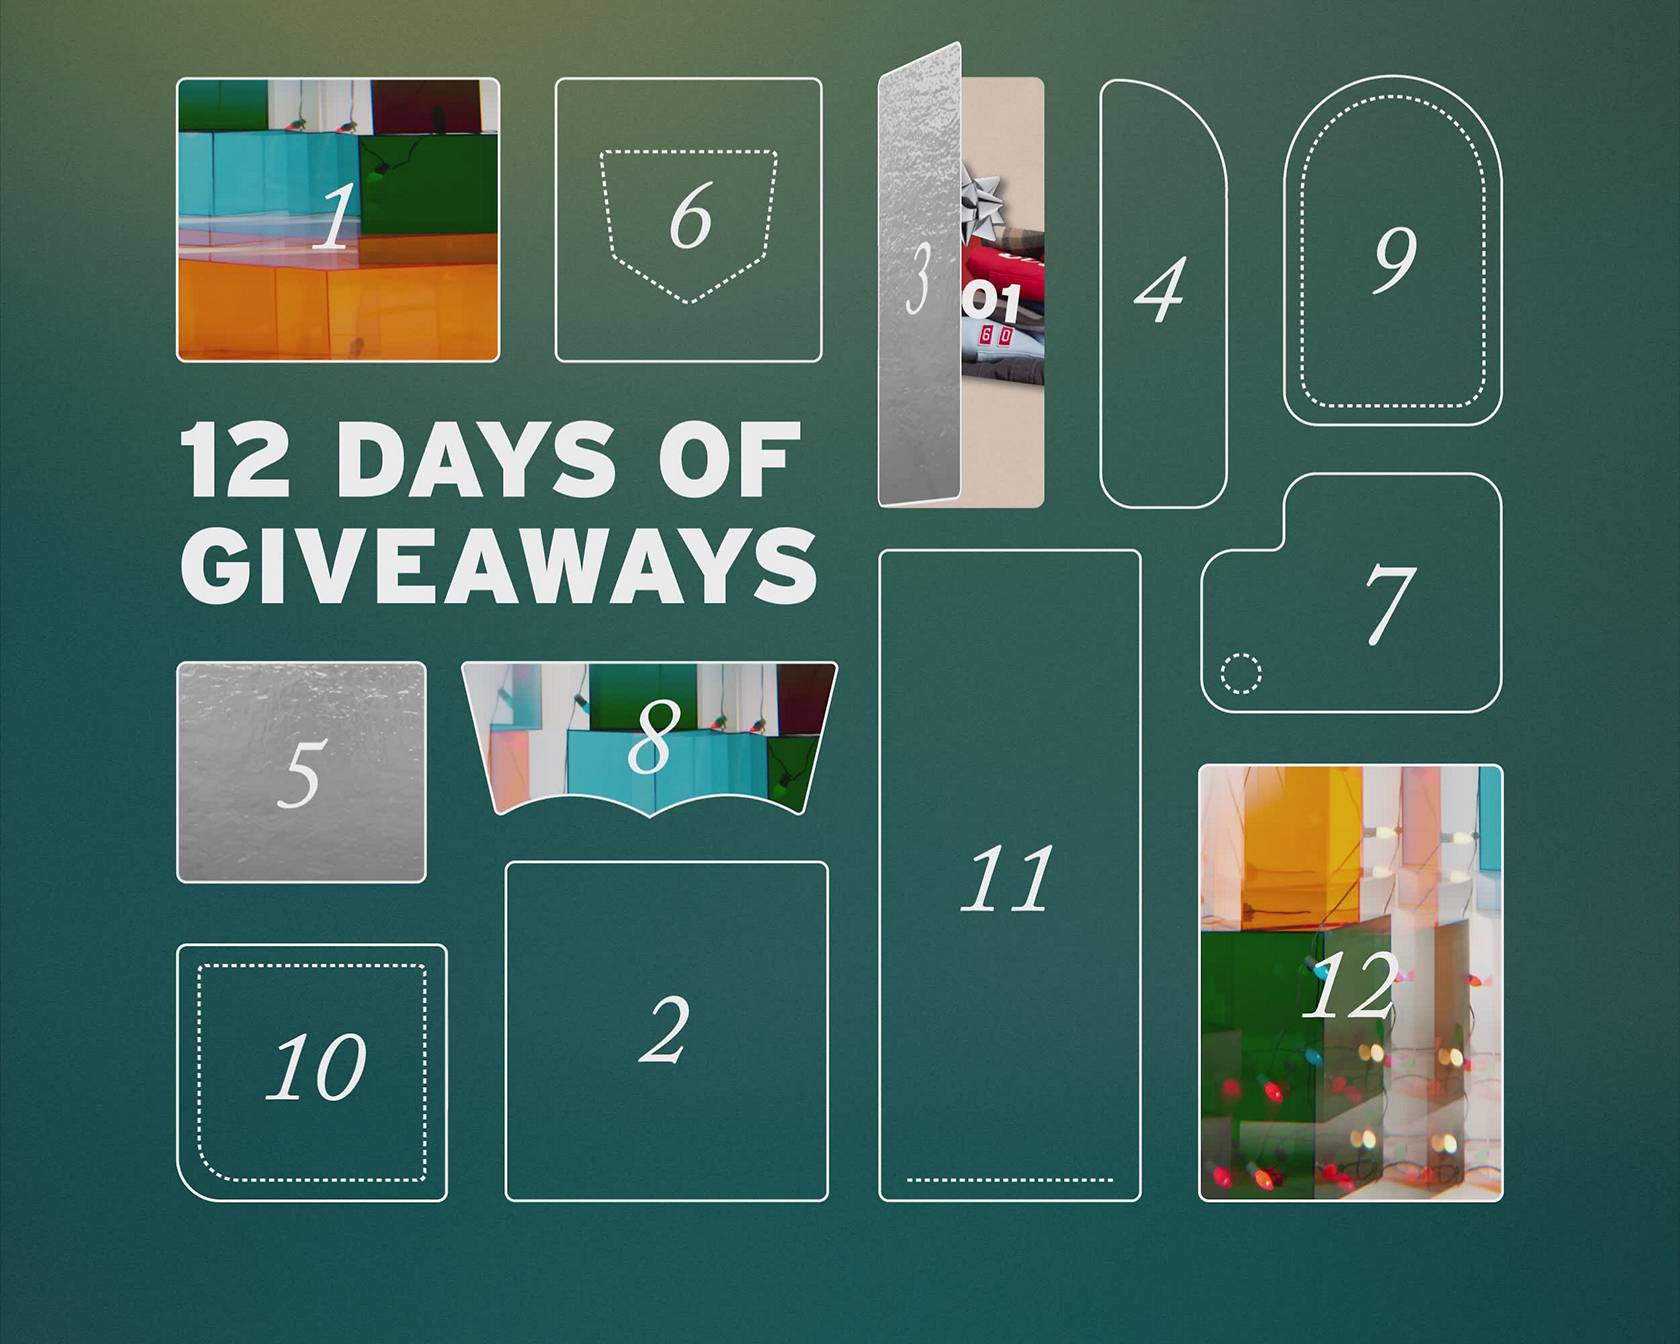 Animating advent calendar doorways revealing giftcards